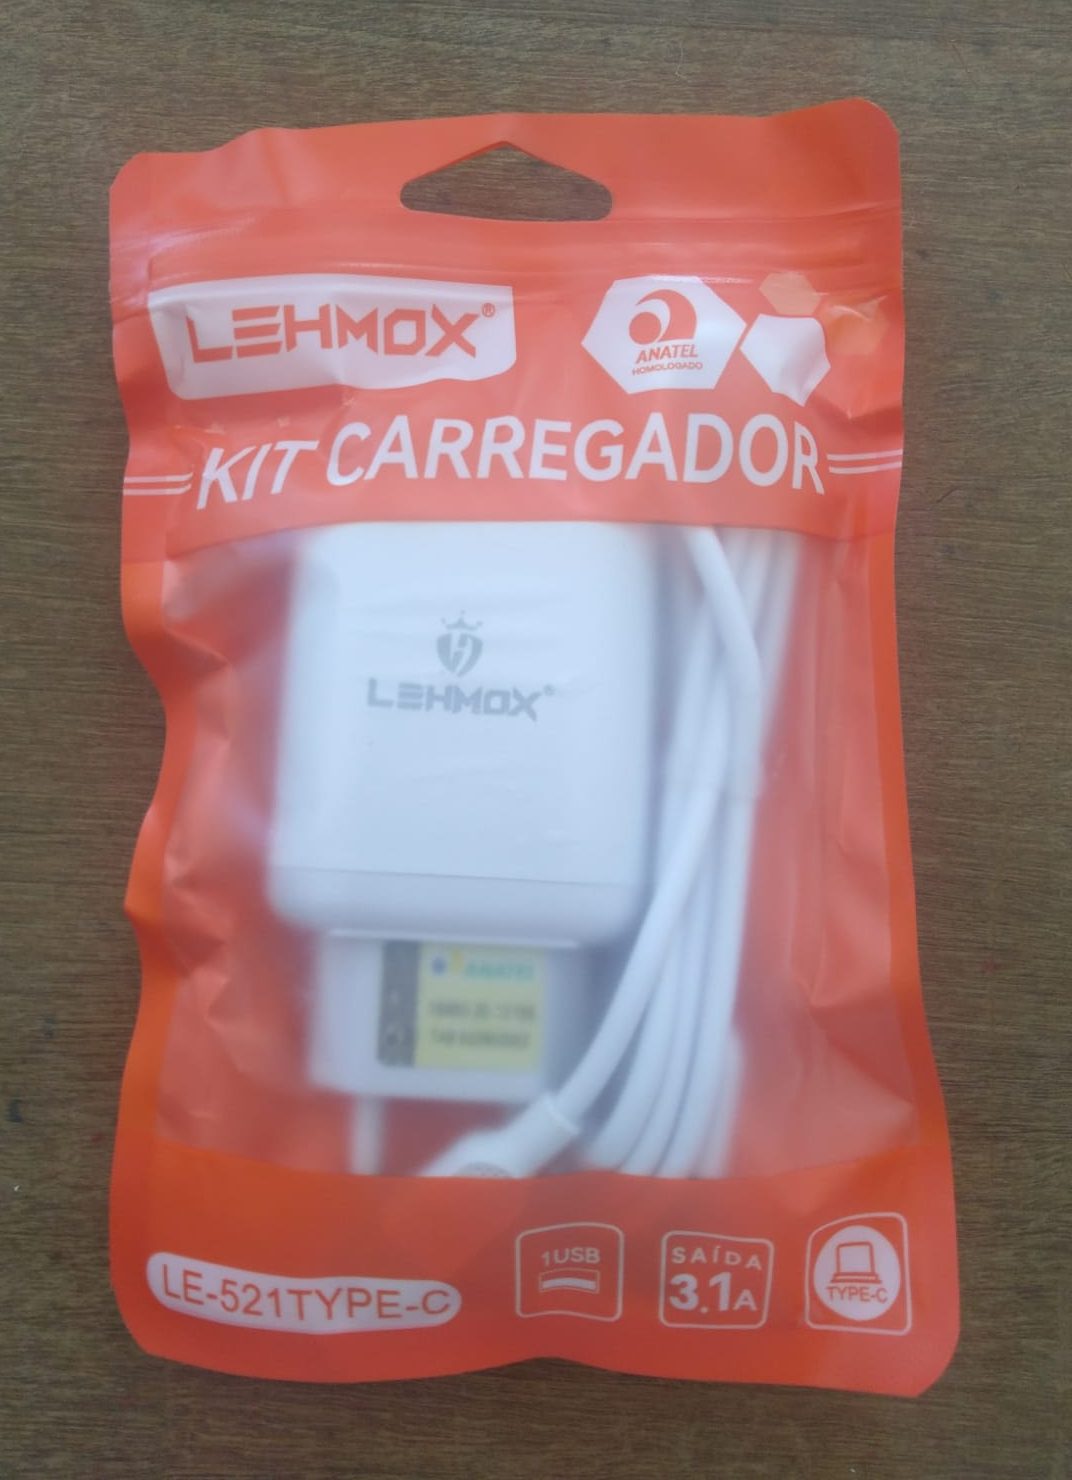 LEHMOX – CARREGADOR C – LE-521 TYPE-C